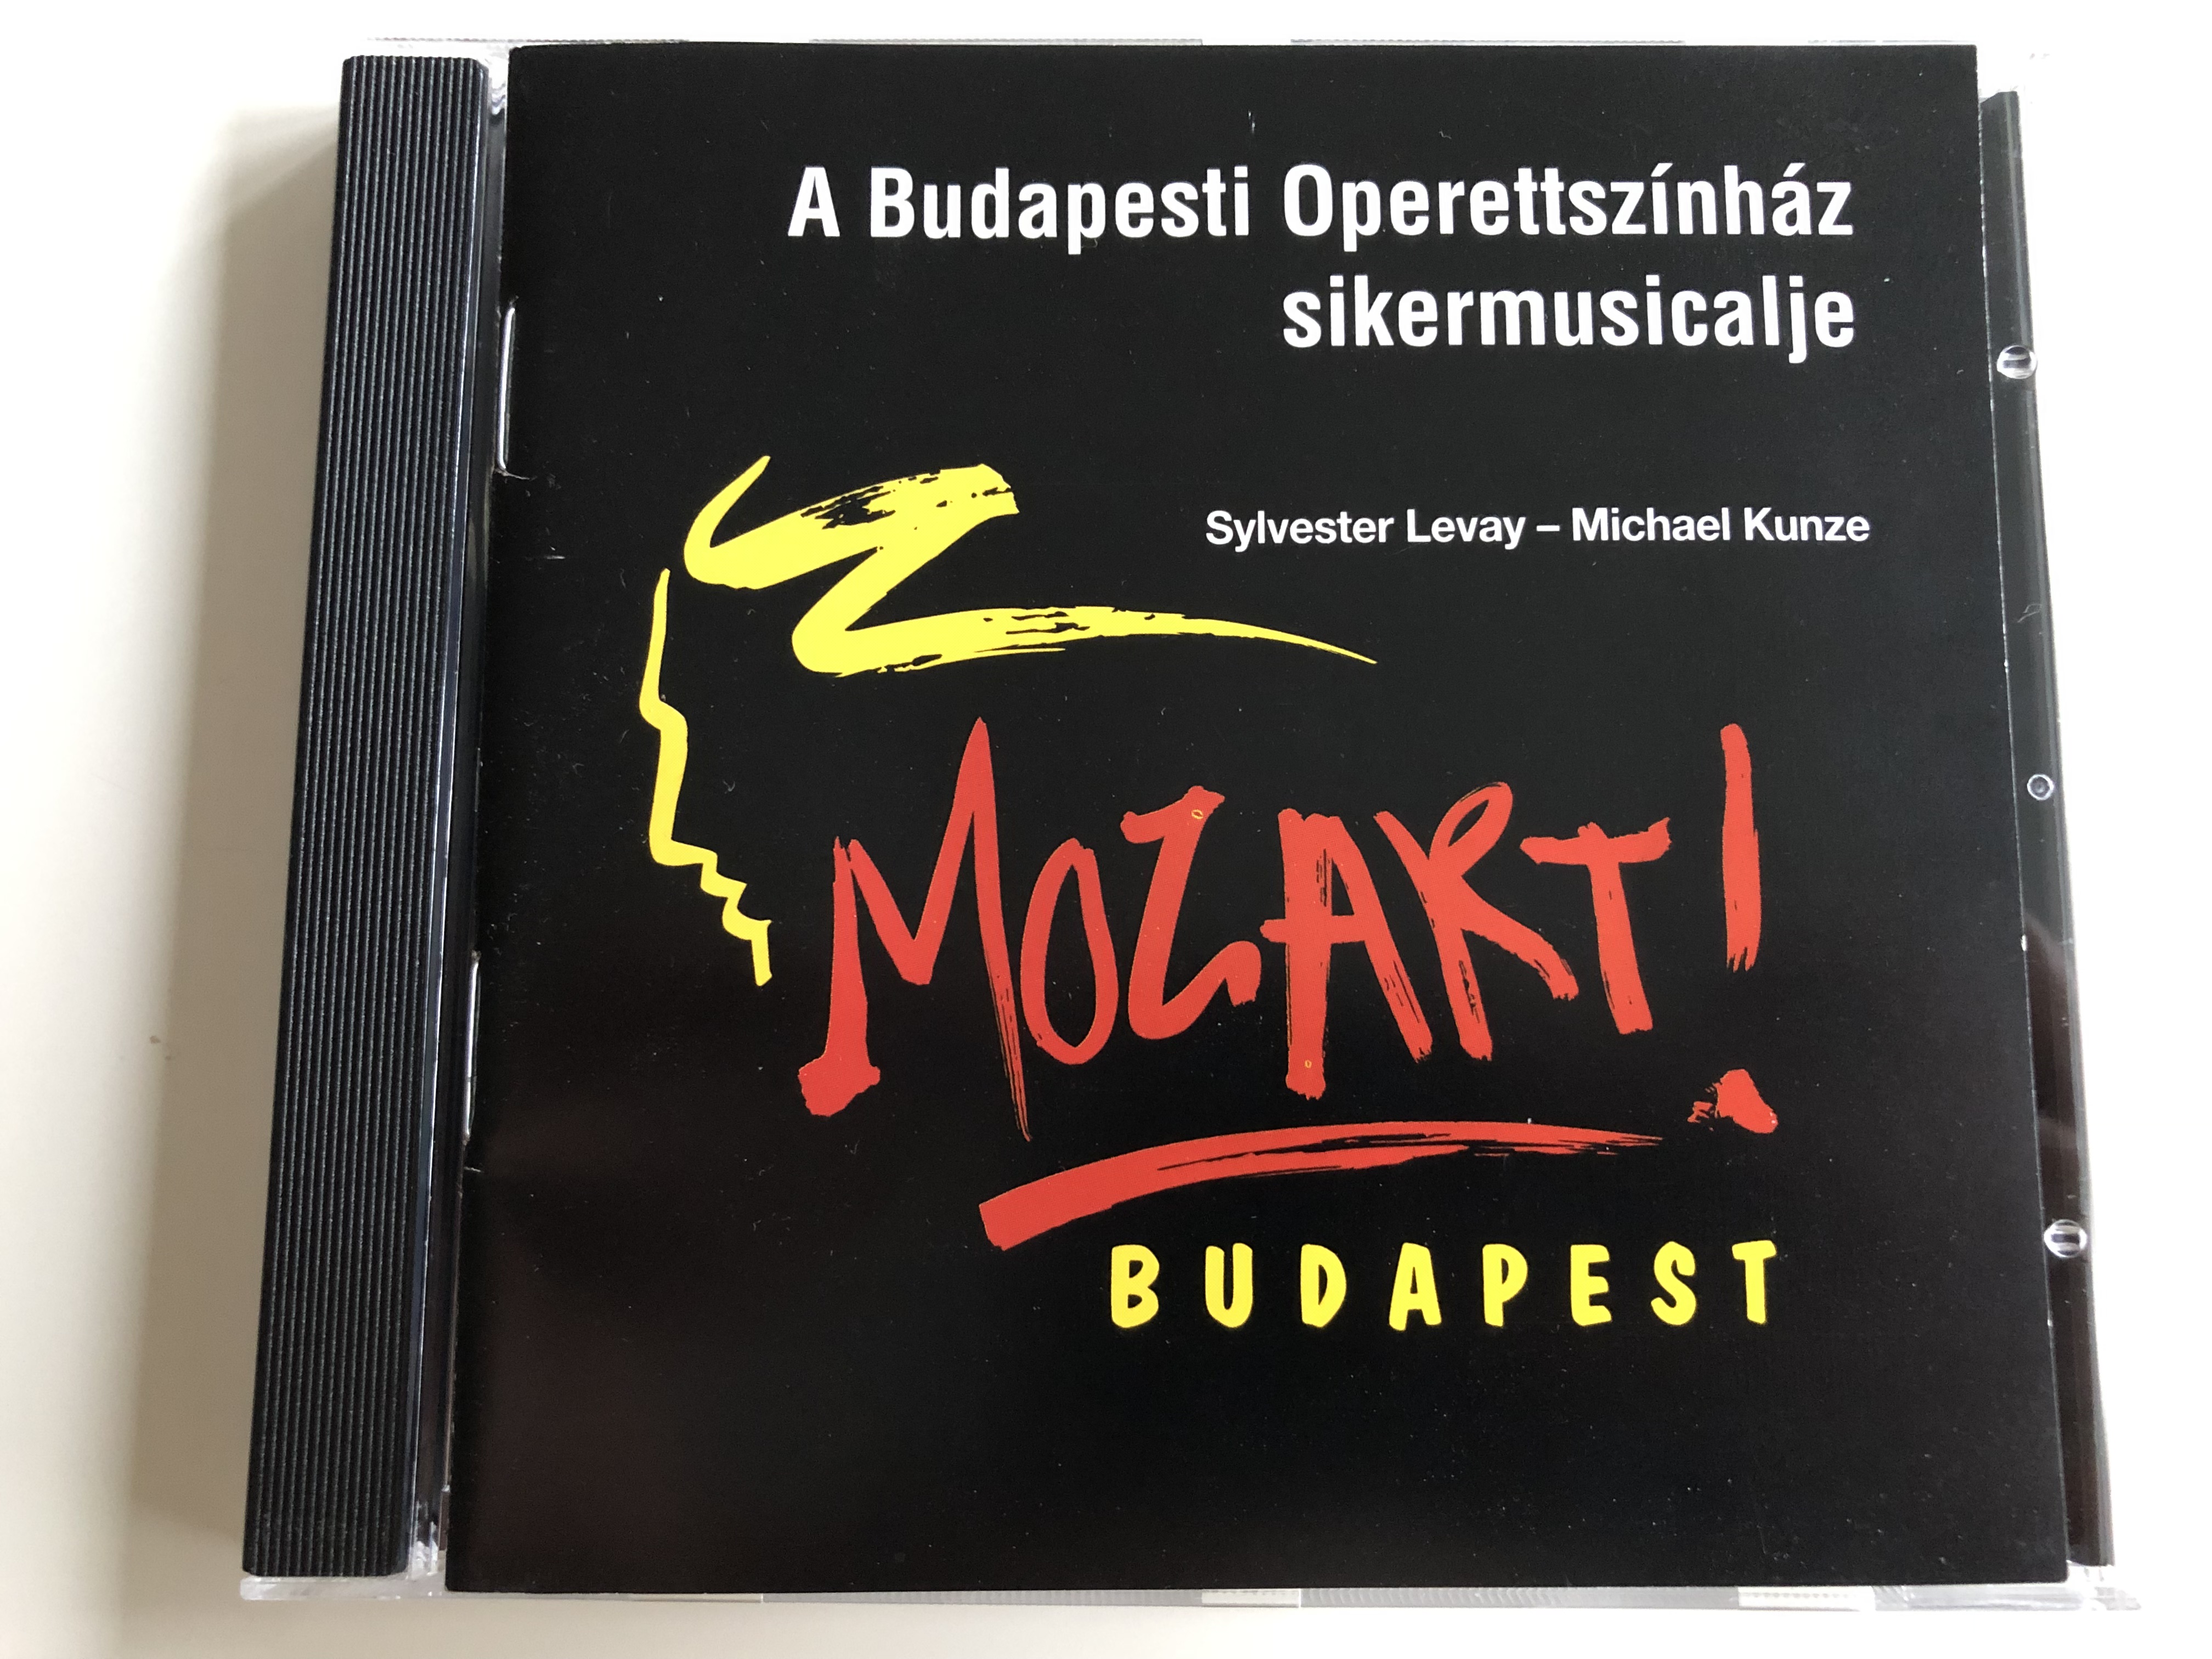 mozart-budapest-sylvester-levay-michael-kunze-budapest-operetta-theater-s-famous-musical-directed-by-ker-nyi-mikl-s-g-bor-audio-cd-2003-hun525-1-.jpg